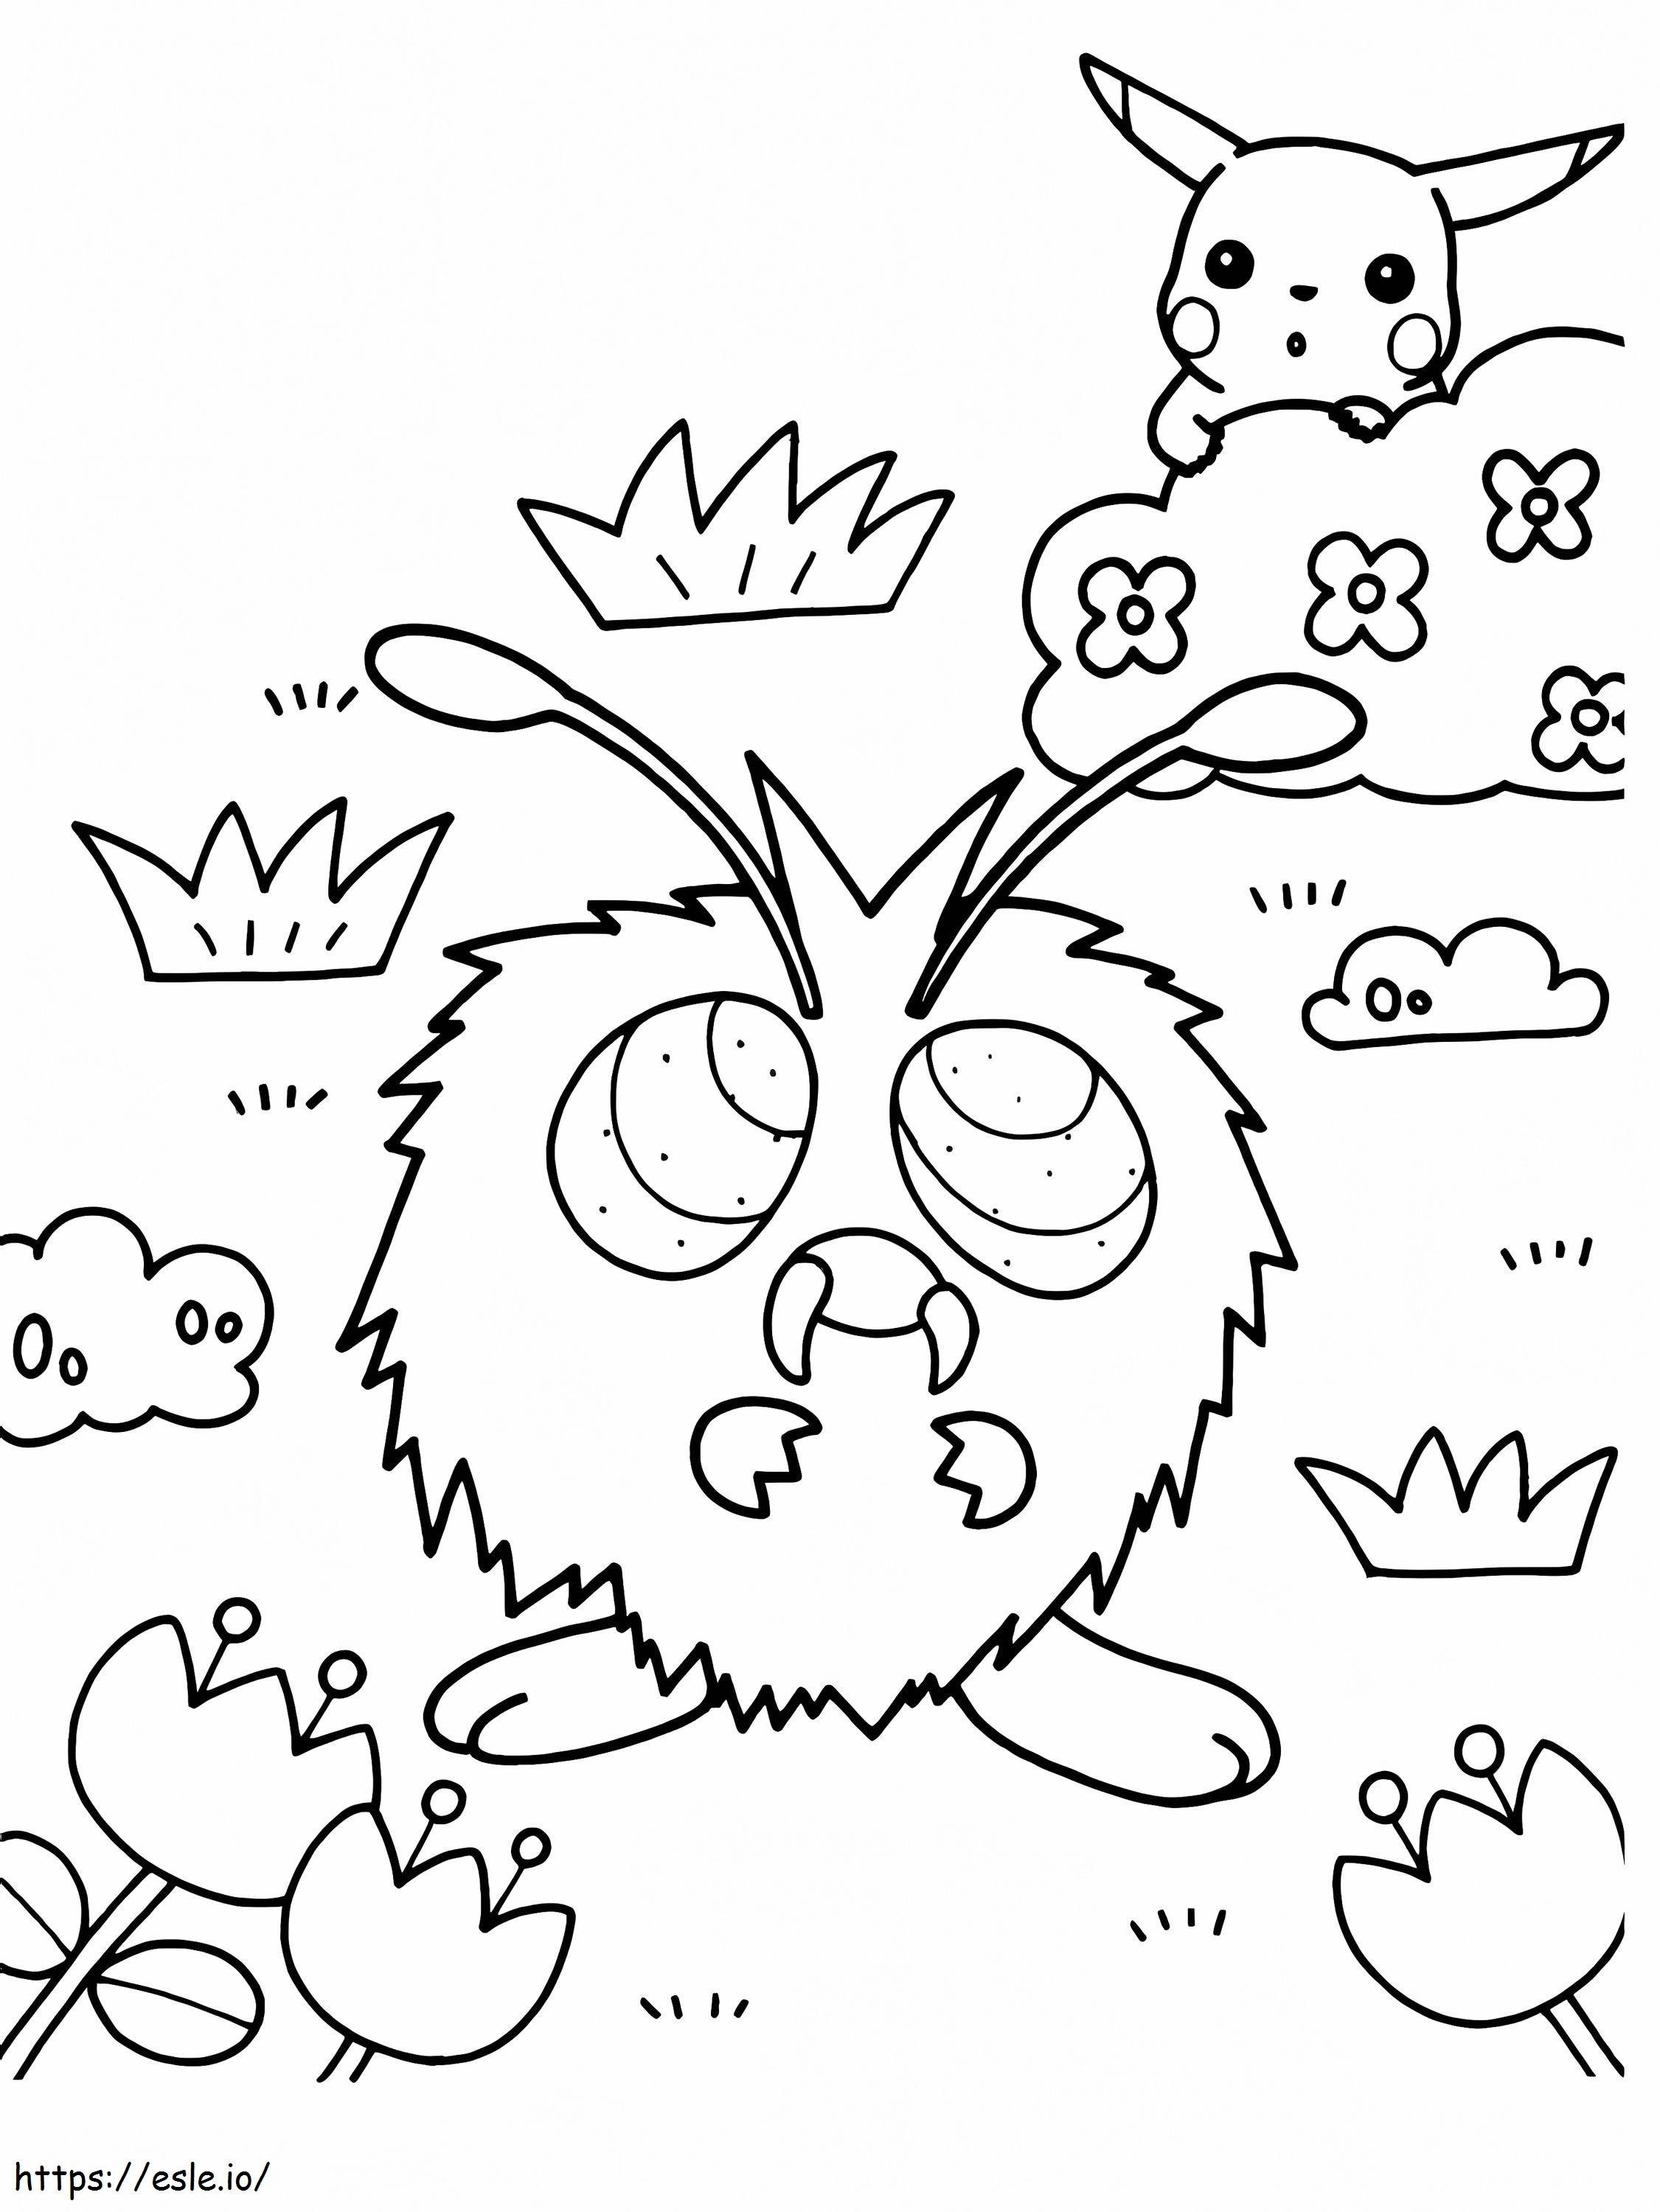 Pikachu And Venonat coloring page